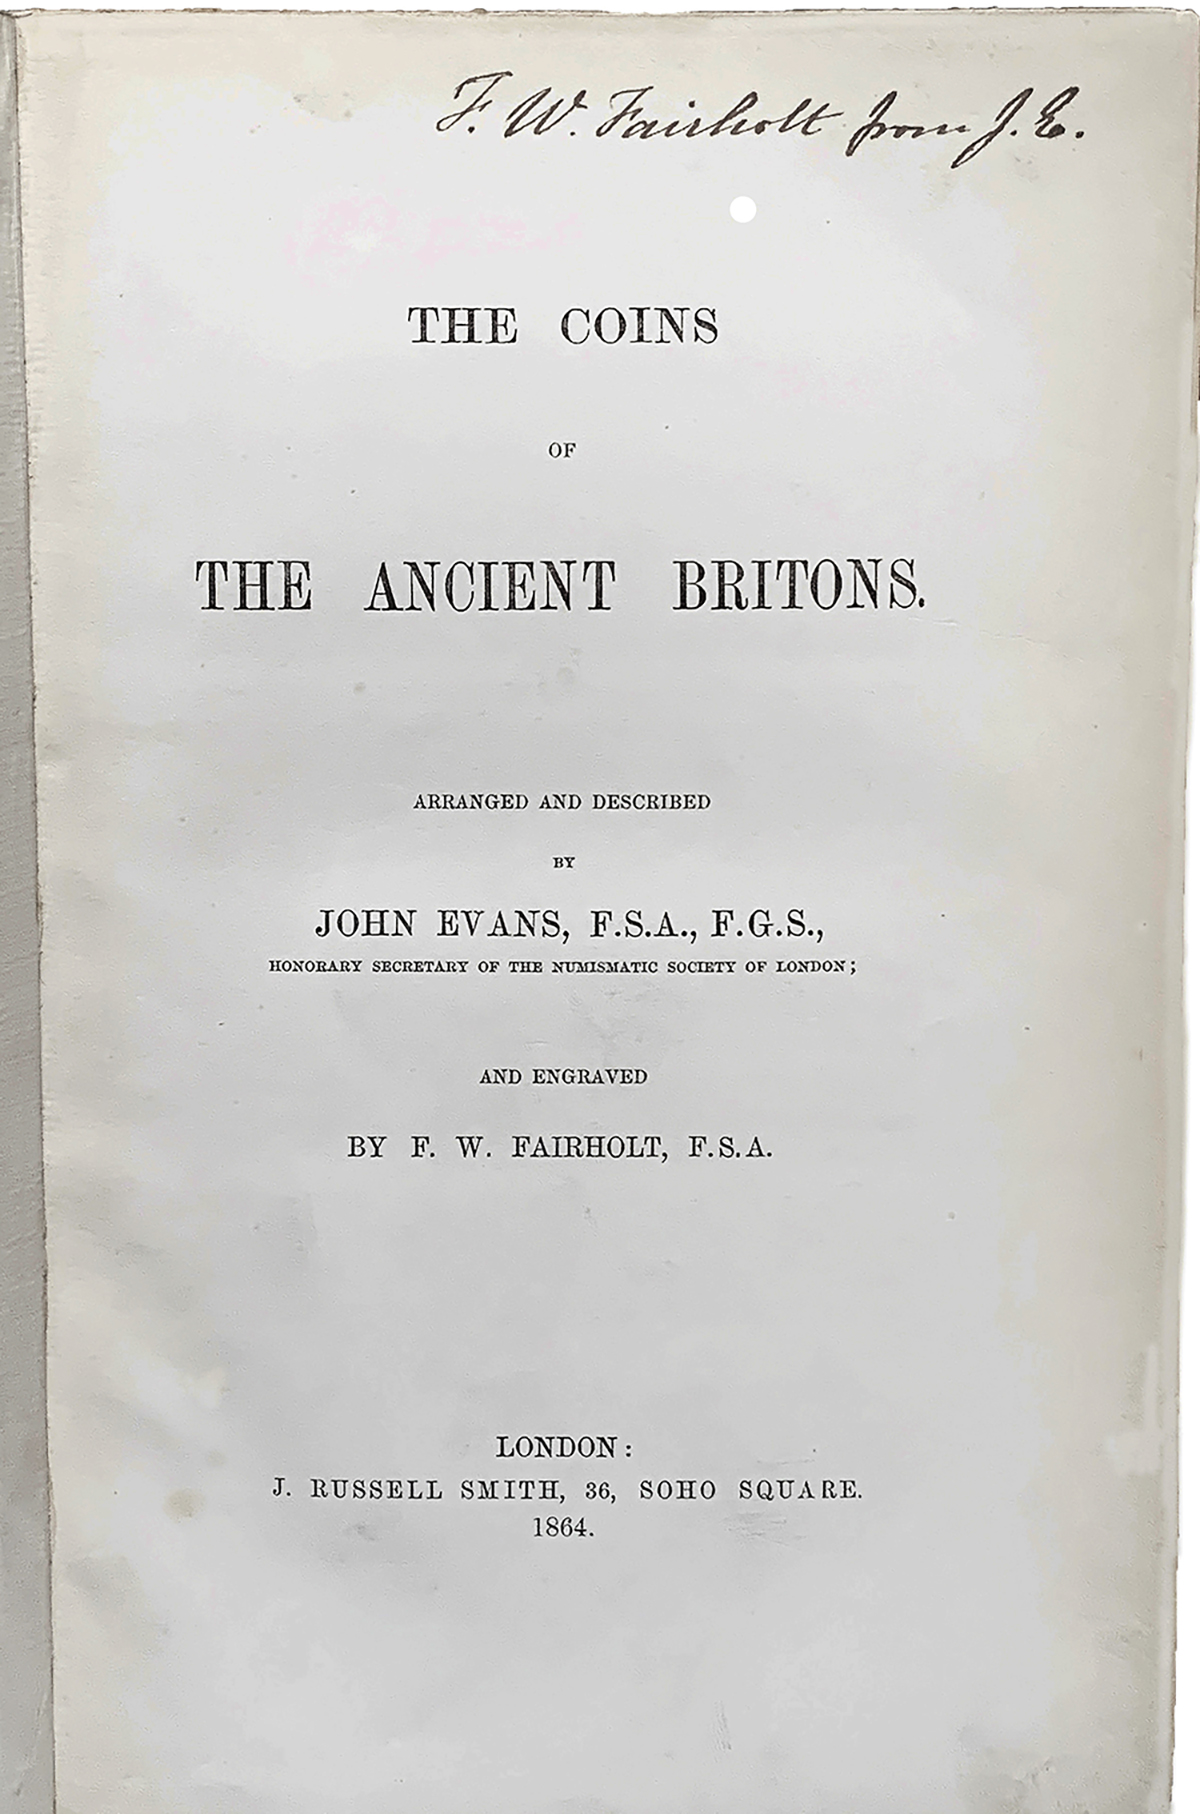 Evans 1864 Fairholt Copy title page with initialed inscription